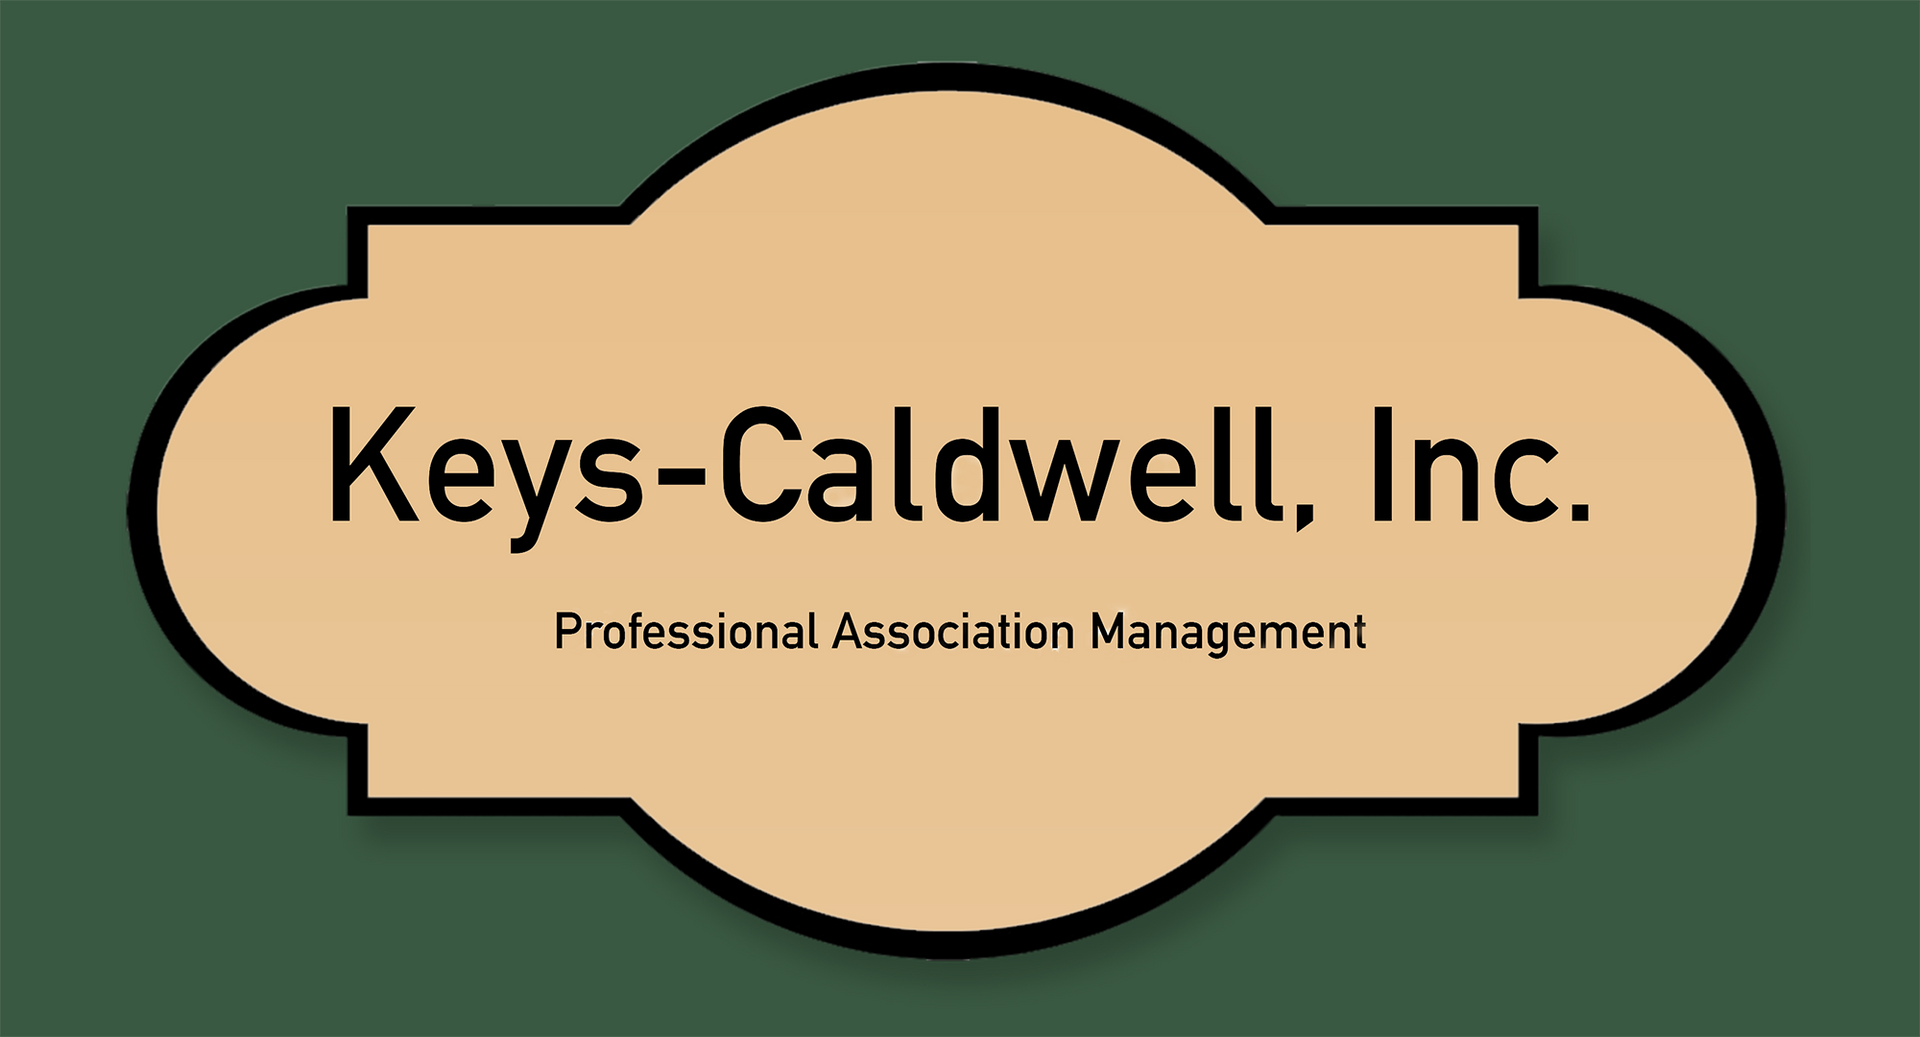 a logo for keys-caldwell inc. professional association management